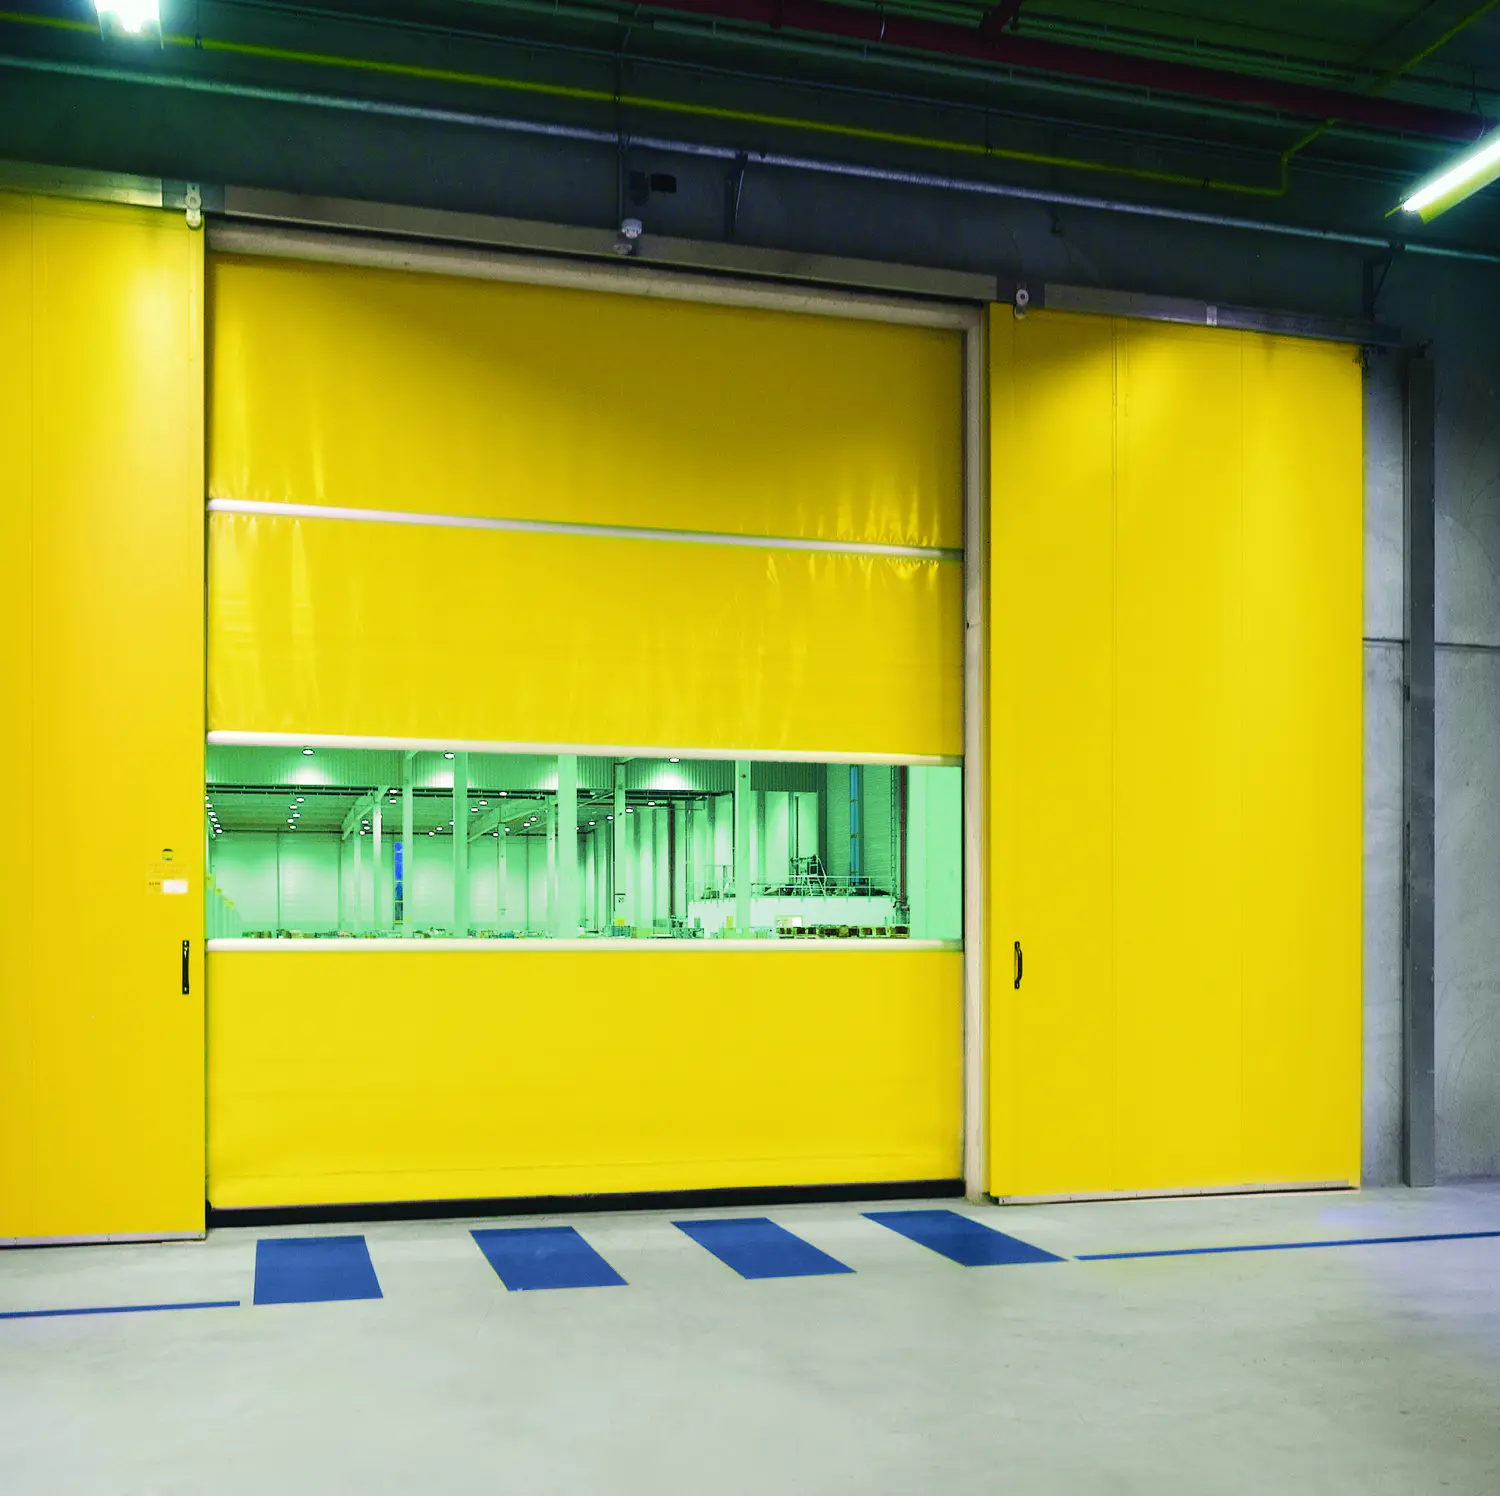 pvc High Speed Rolling Door for Industry Used Warehouse Entry door